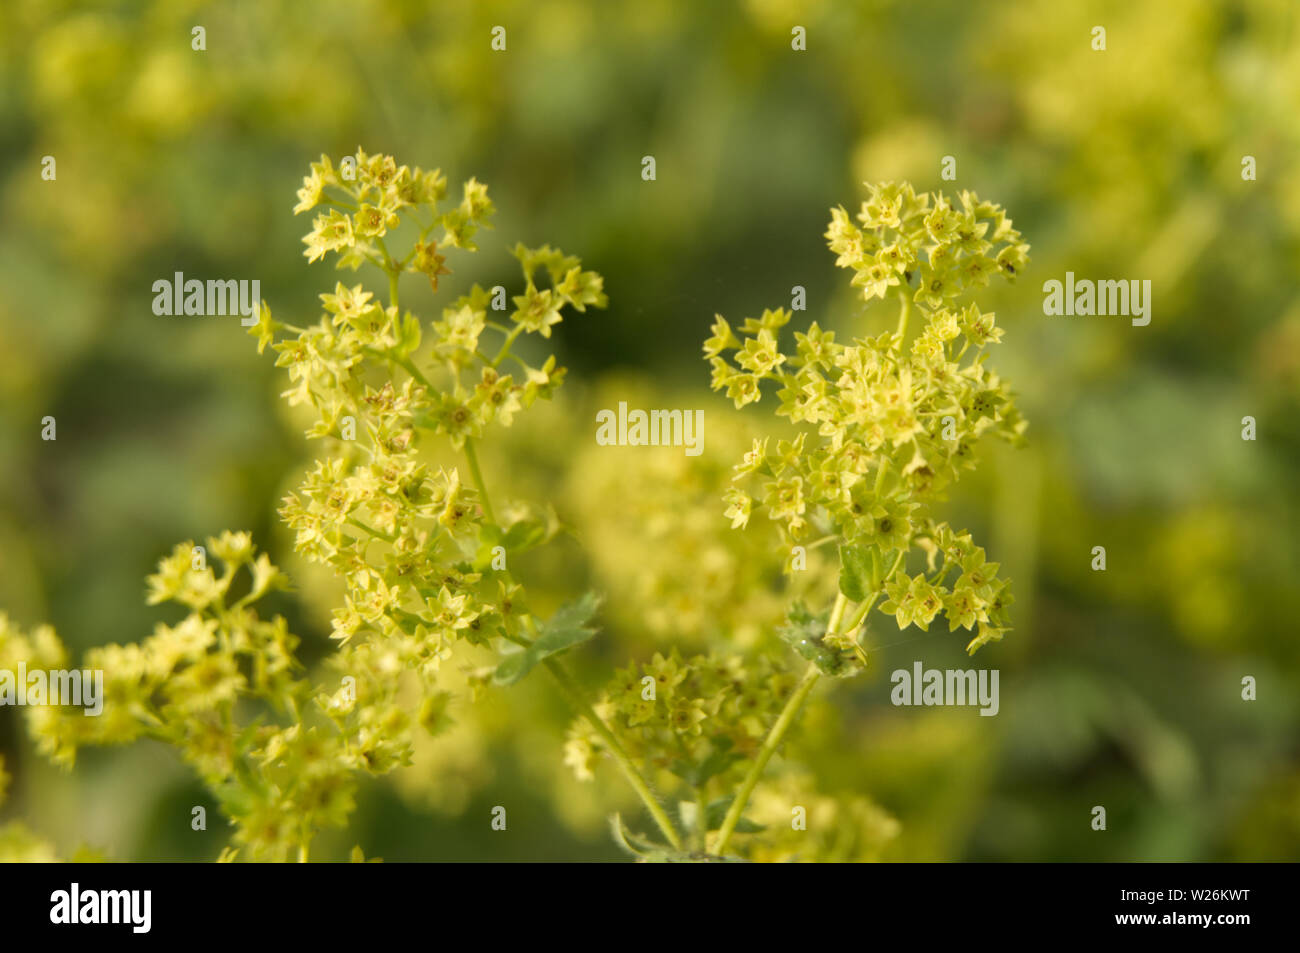 macrophotography of tiny green flowers of alchemilla vulgaris in sunlight Stock Photo